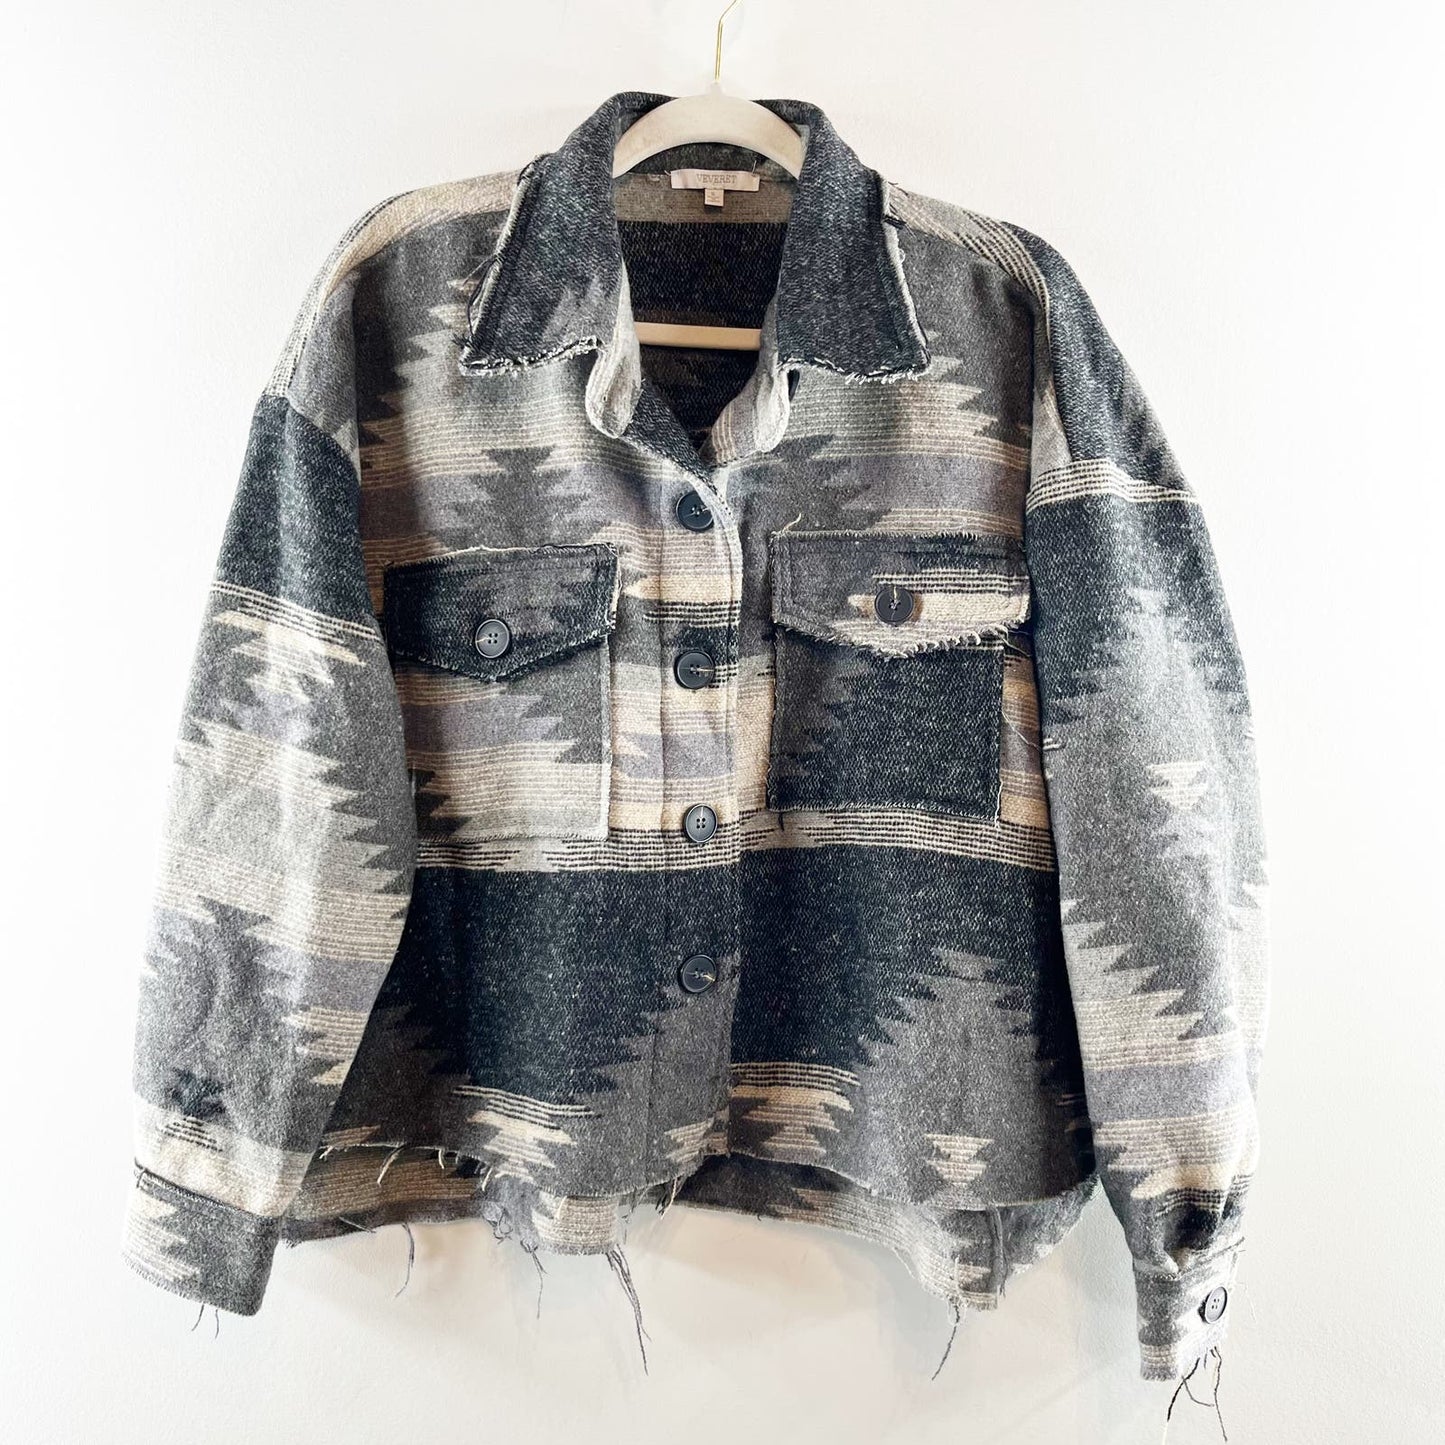 Veveret Aztec Southwestern Cutoff Shacket Shirt Jacket Gray Small